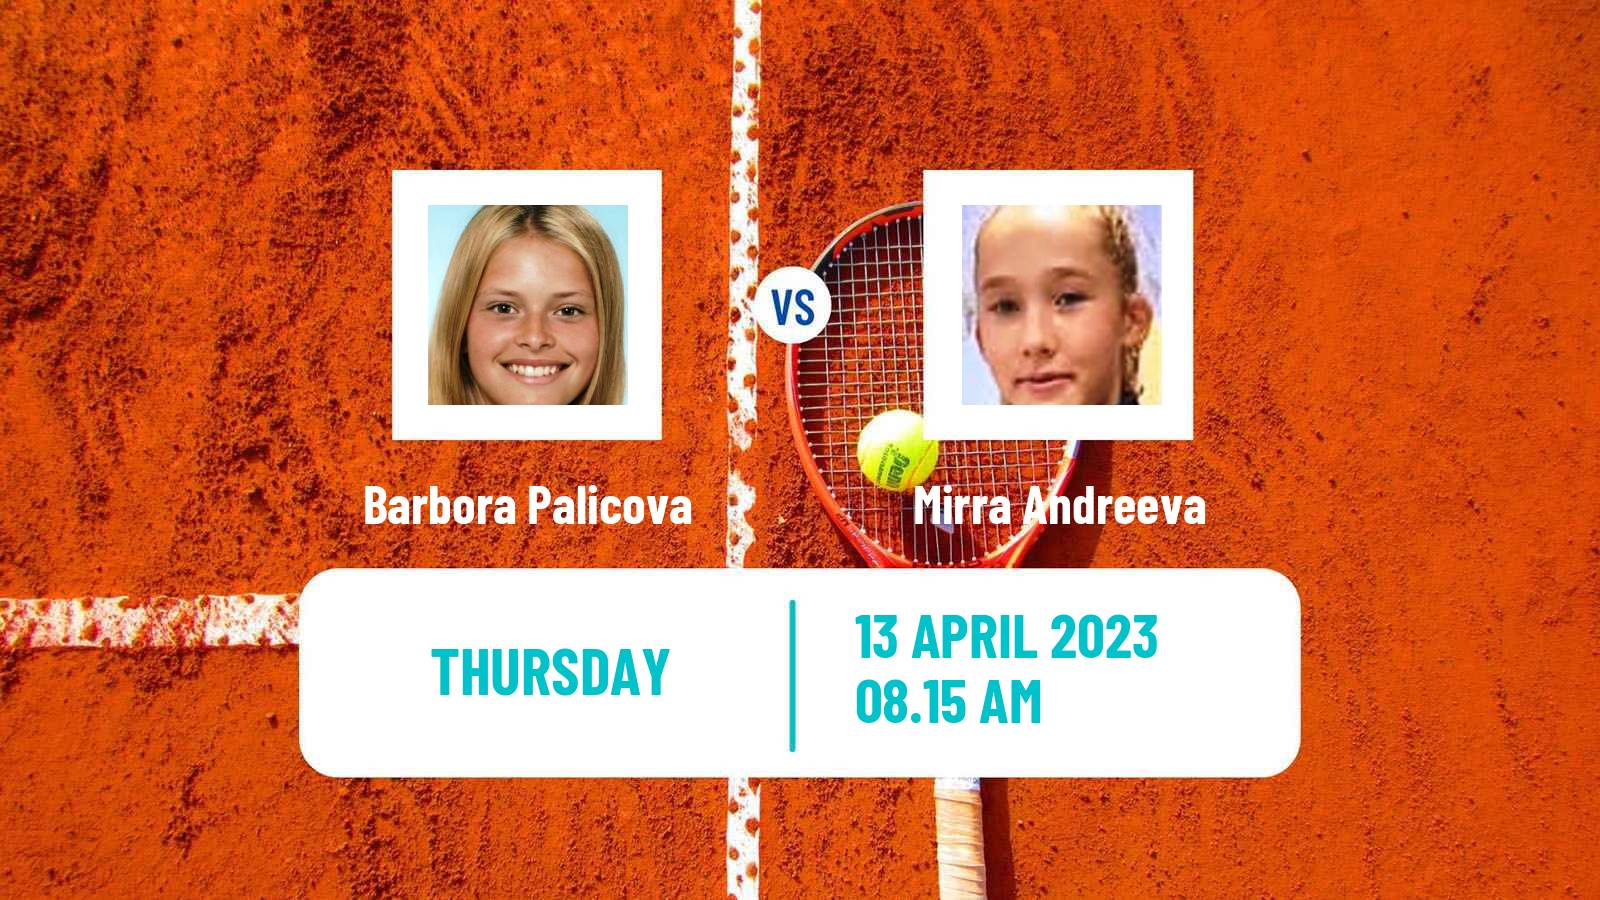 Tennis ITF Tournaments Barbora Palicova - Mirra Andreeva